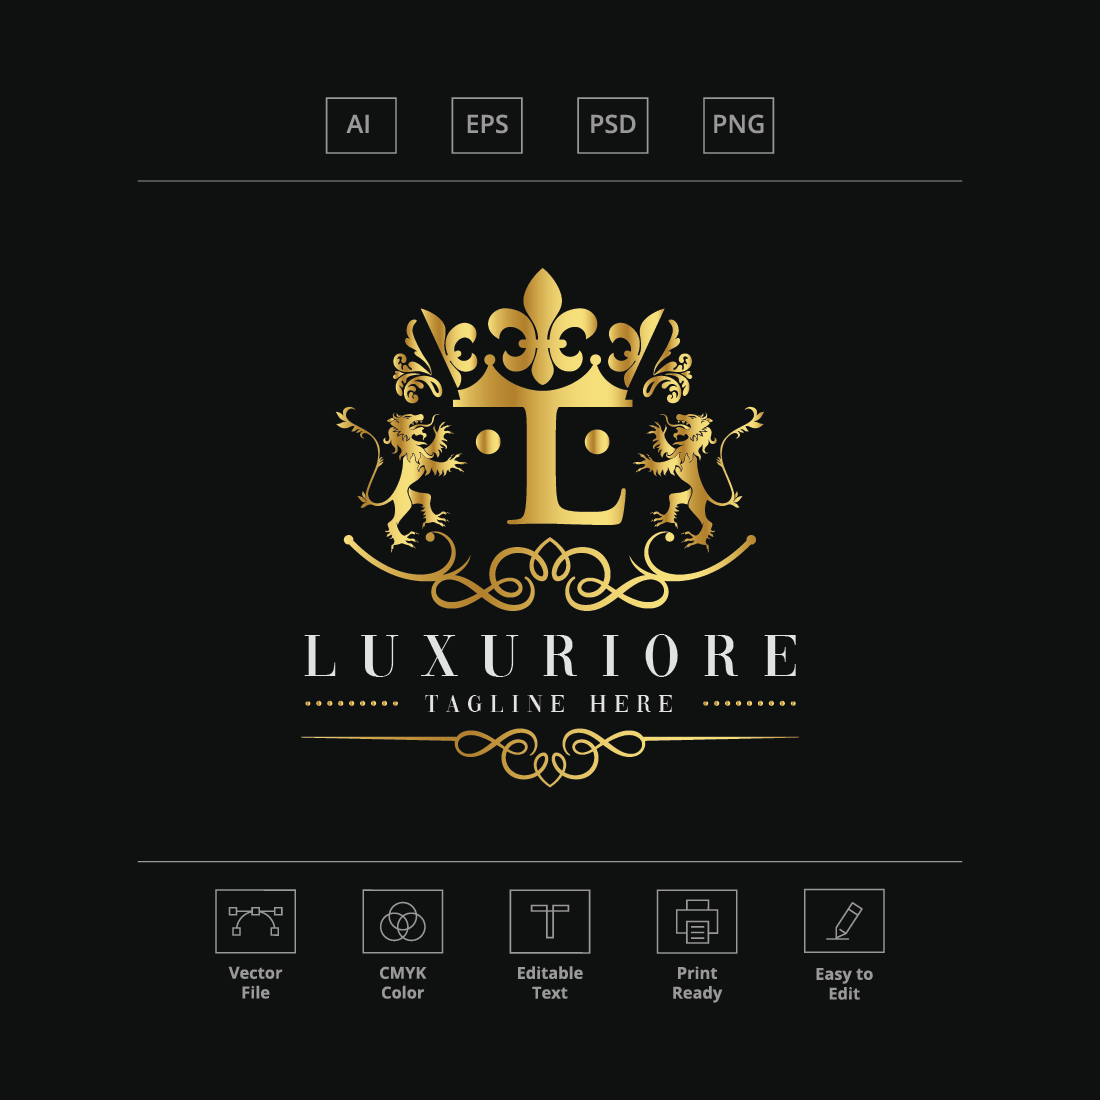 Luxuriore Letter L Logo preview image.